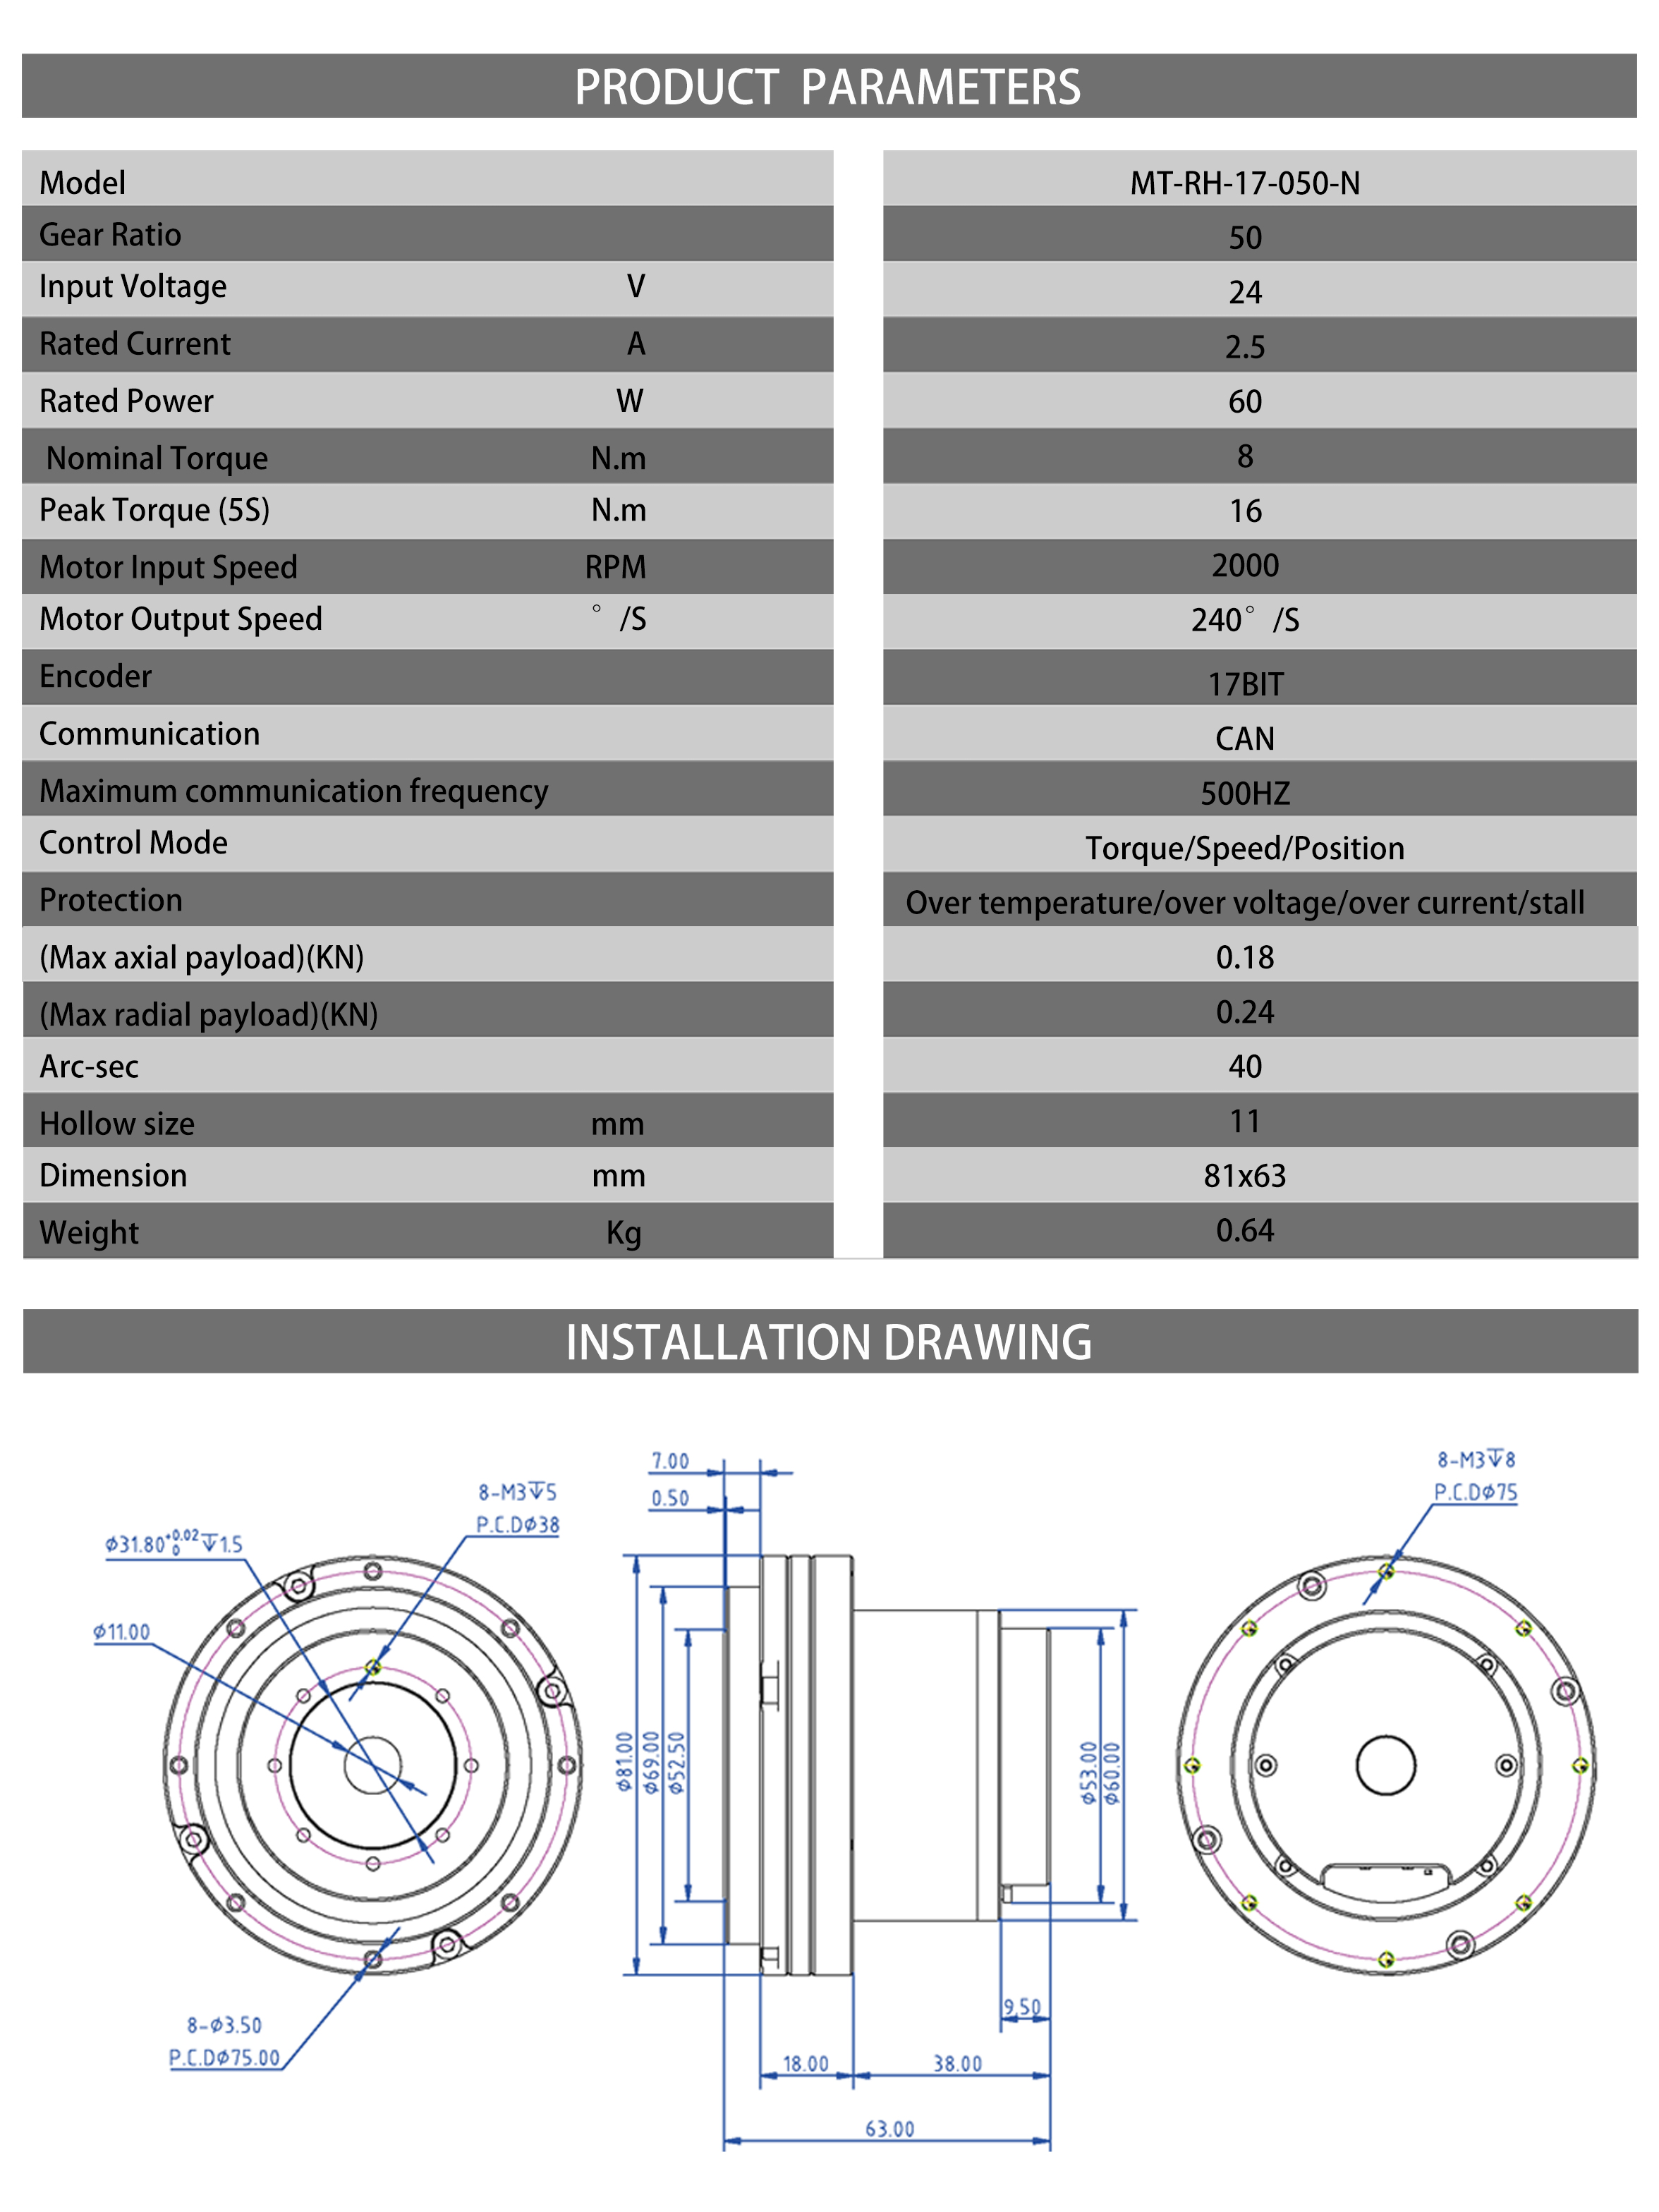 MT-RH-17-050-N Series Hollow shaft motor Harmonic drive reducer 100 to 1 actuator